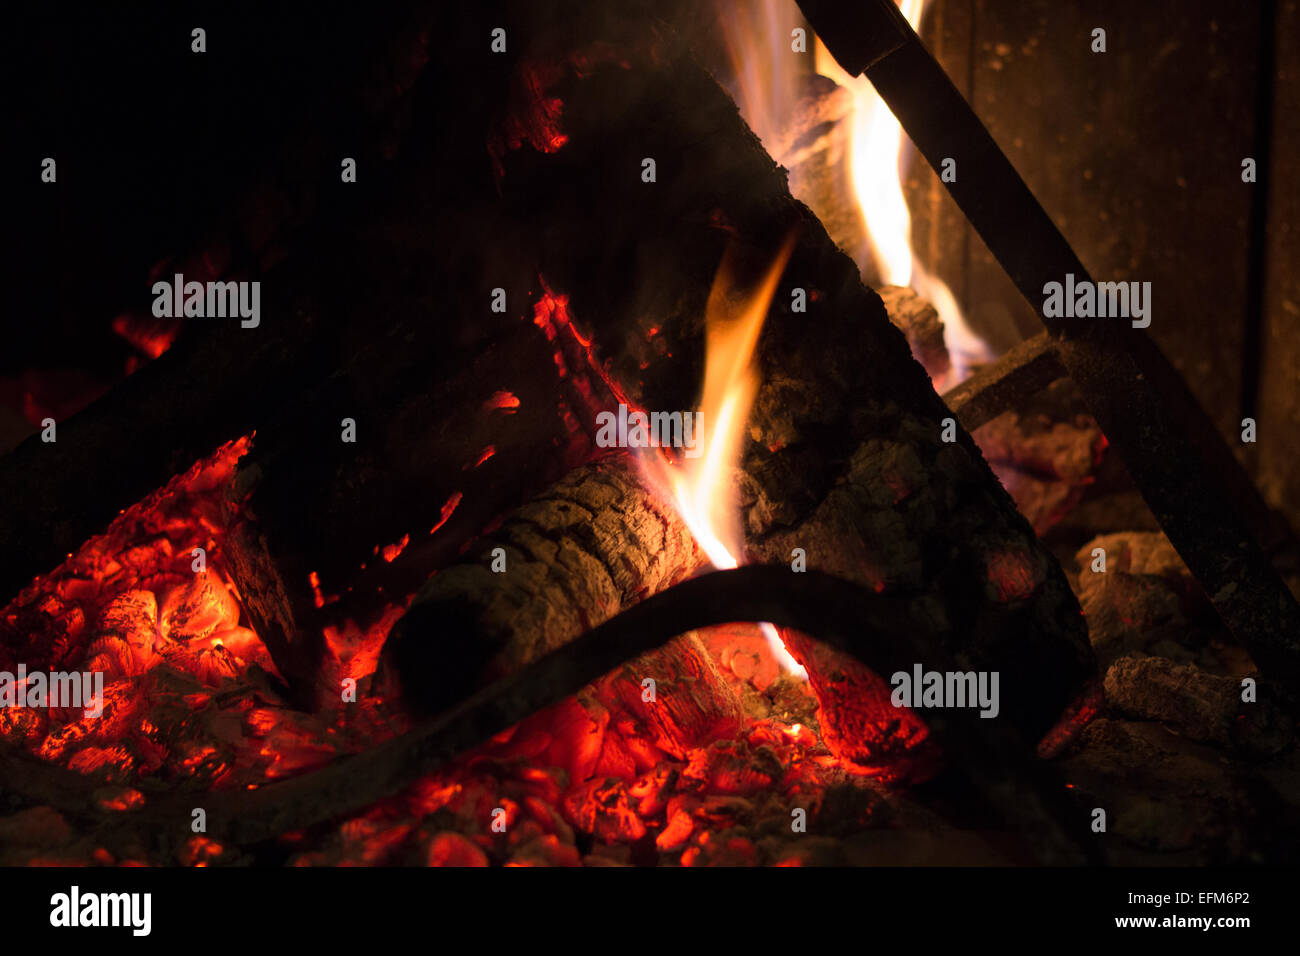 Feuer Flamme Kamin Wälder brennen glühende Kohle Textur Stockfoto